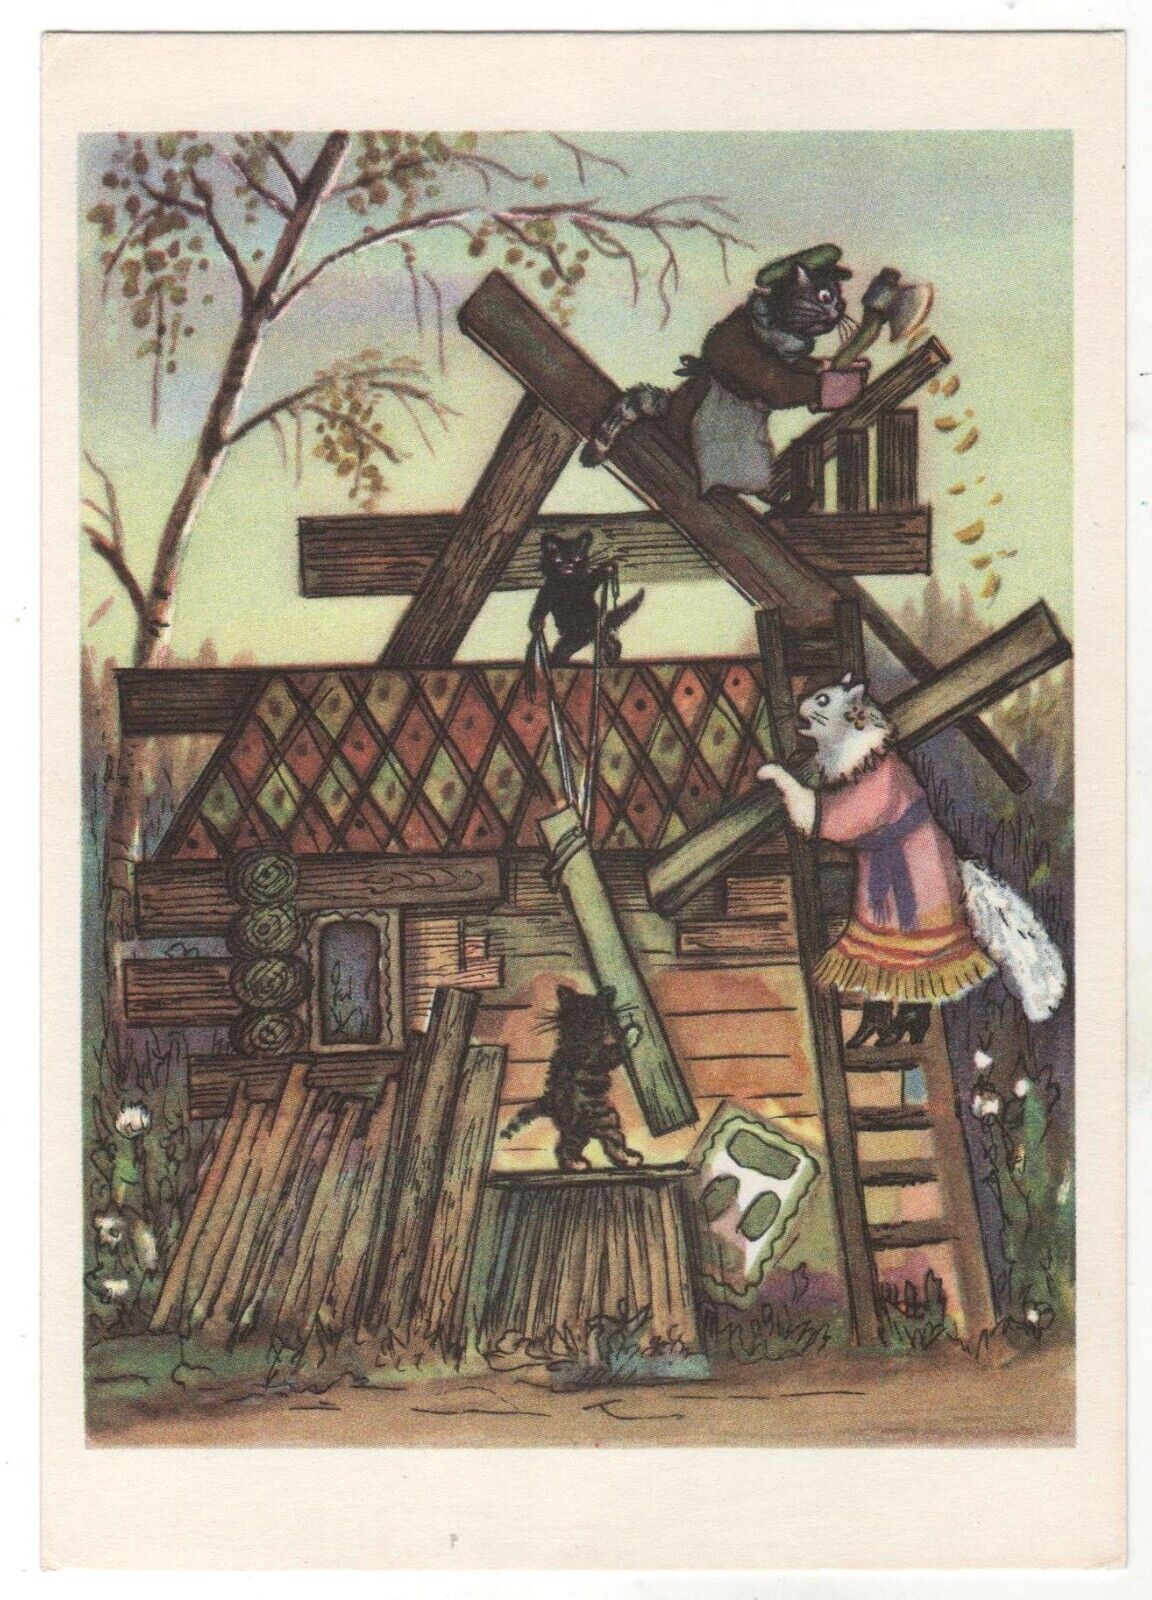 1974 Fairy Tale Kitty CAT's house build ART VASNETSOV RUSSIAN POSTCARD Old